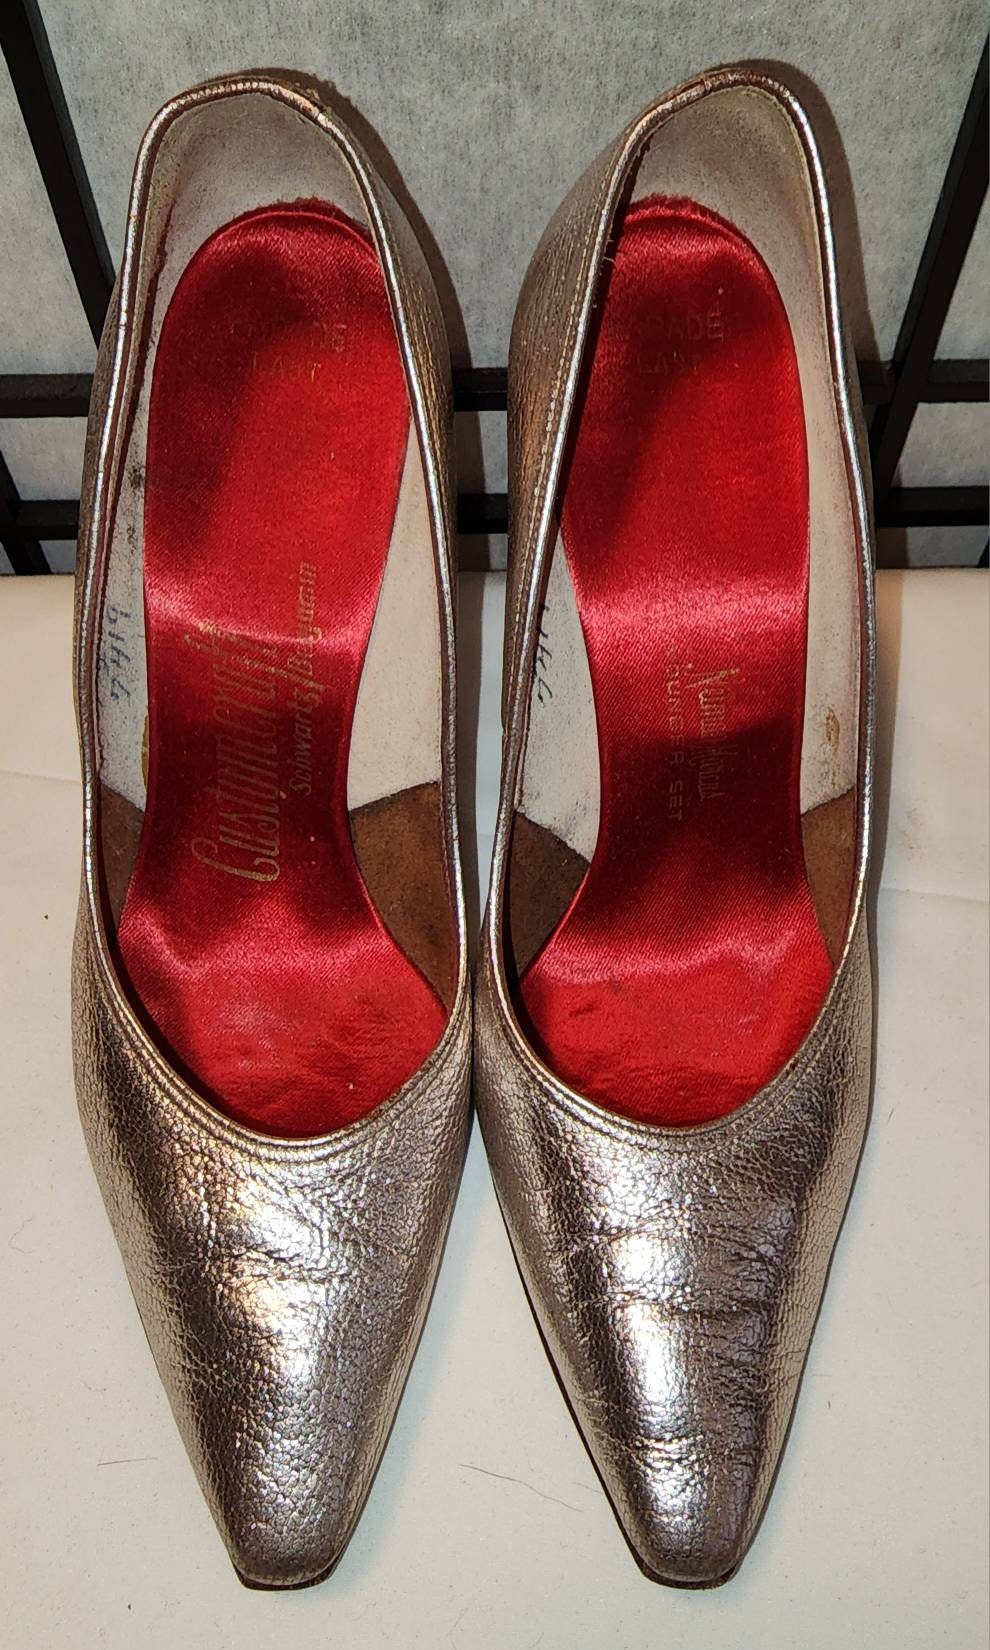 Vintage Silver Shoes 1950s 60s Silver Metallic Leather or Vinyl Stiletto High Heel Pumps Mid Century Rockabilly 4.5 B